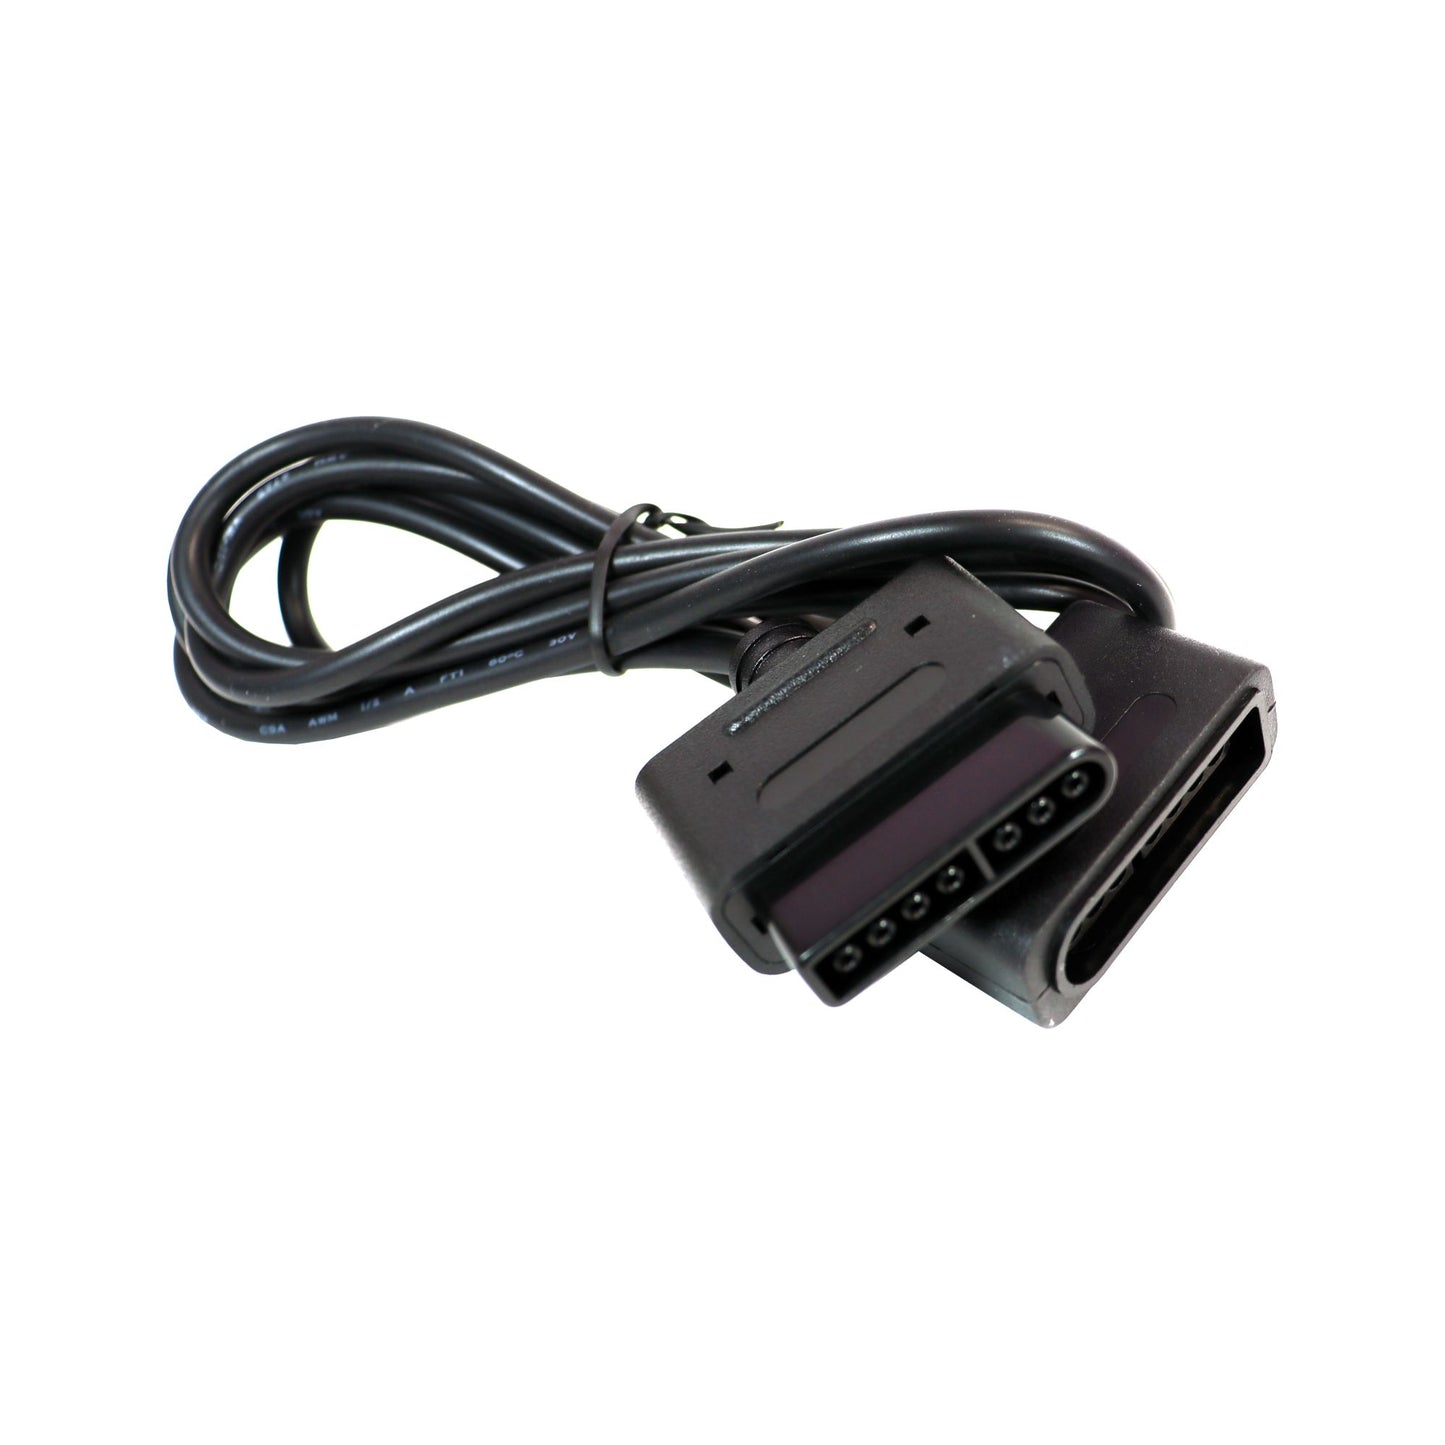 Nintendo SNES Controller Extension Cable  Cord Black 6 Feet x2